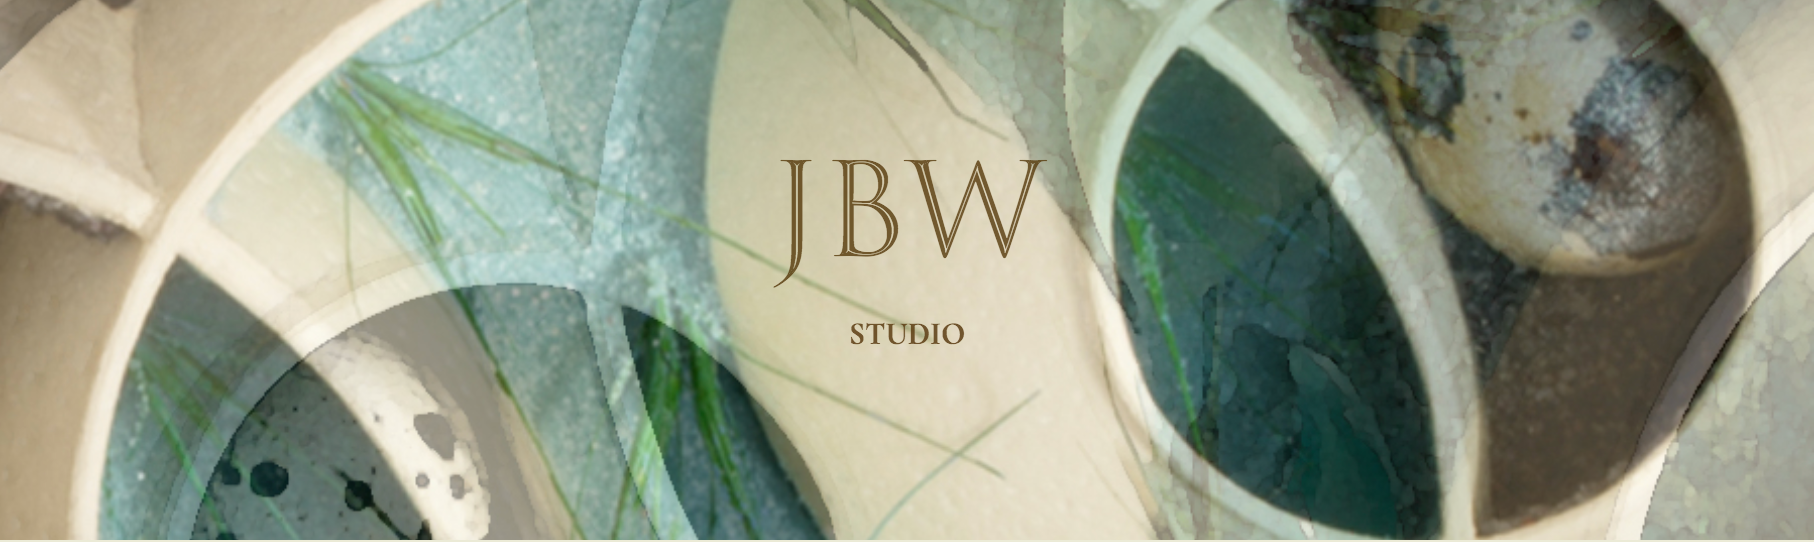 JBW Studio